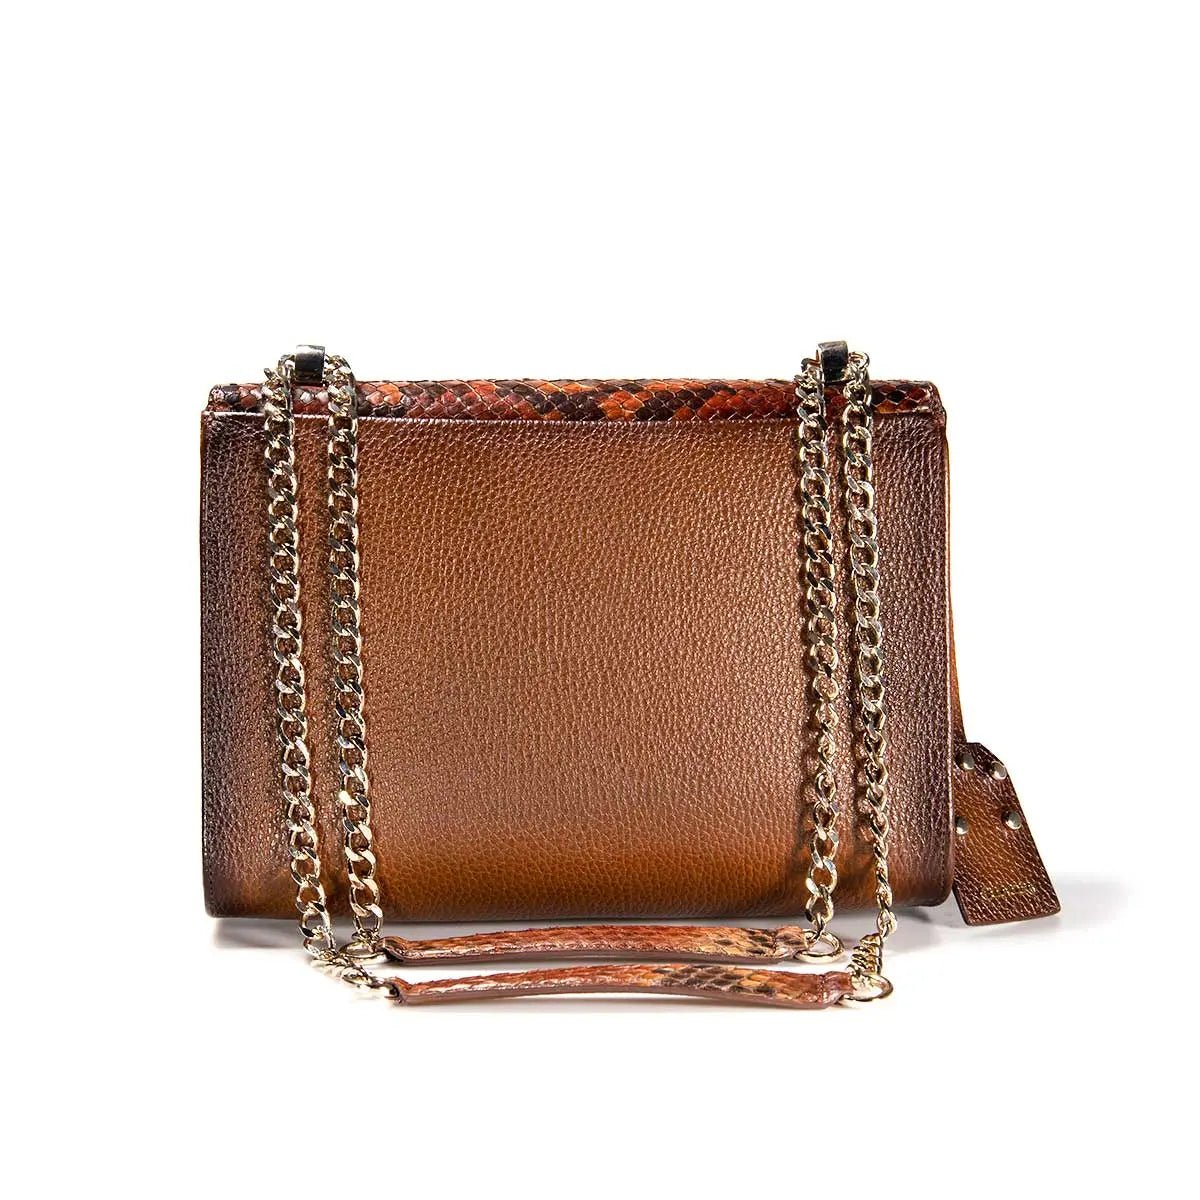 BOD53PI - Cuadra brown western casual leather python shoulder bag for women.-Kuet.us